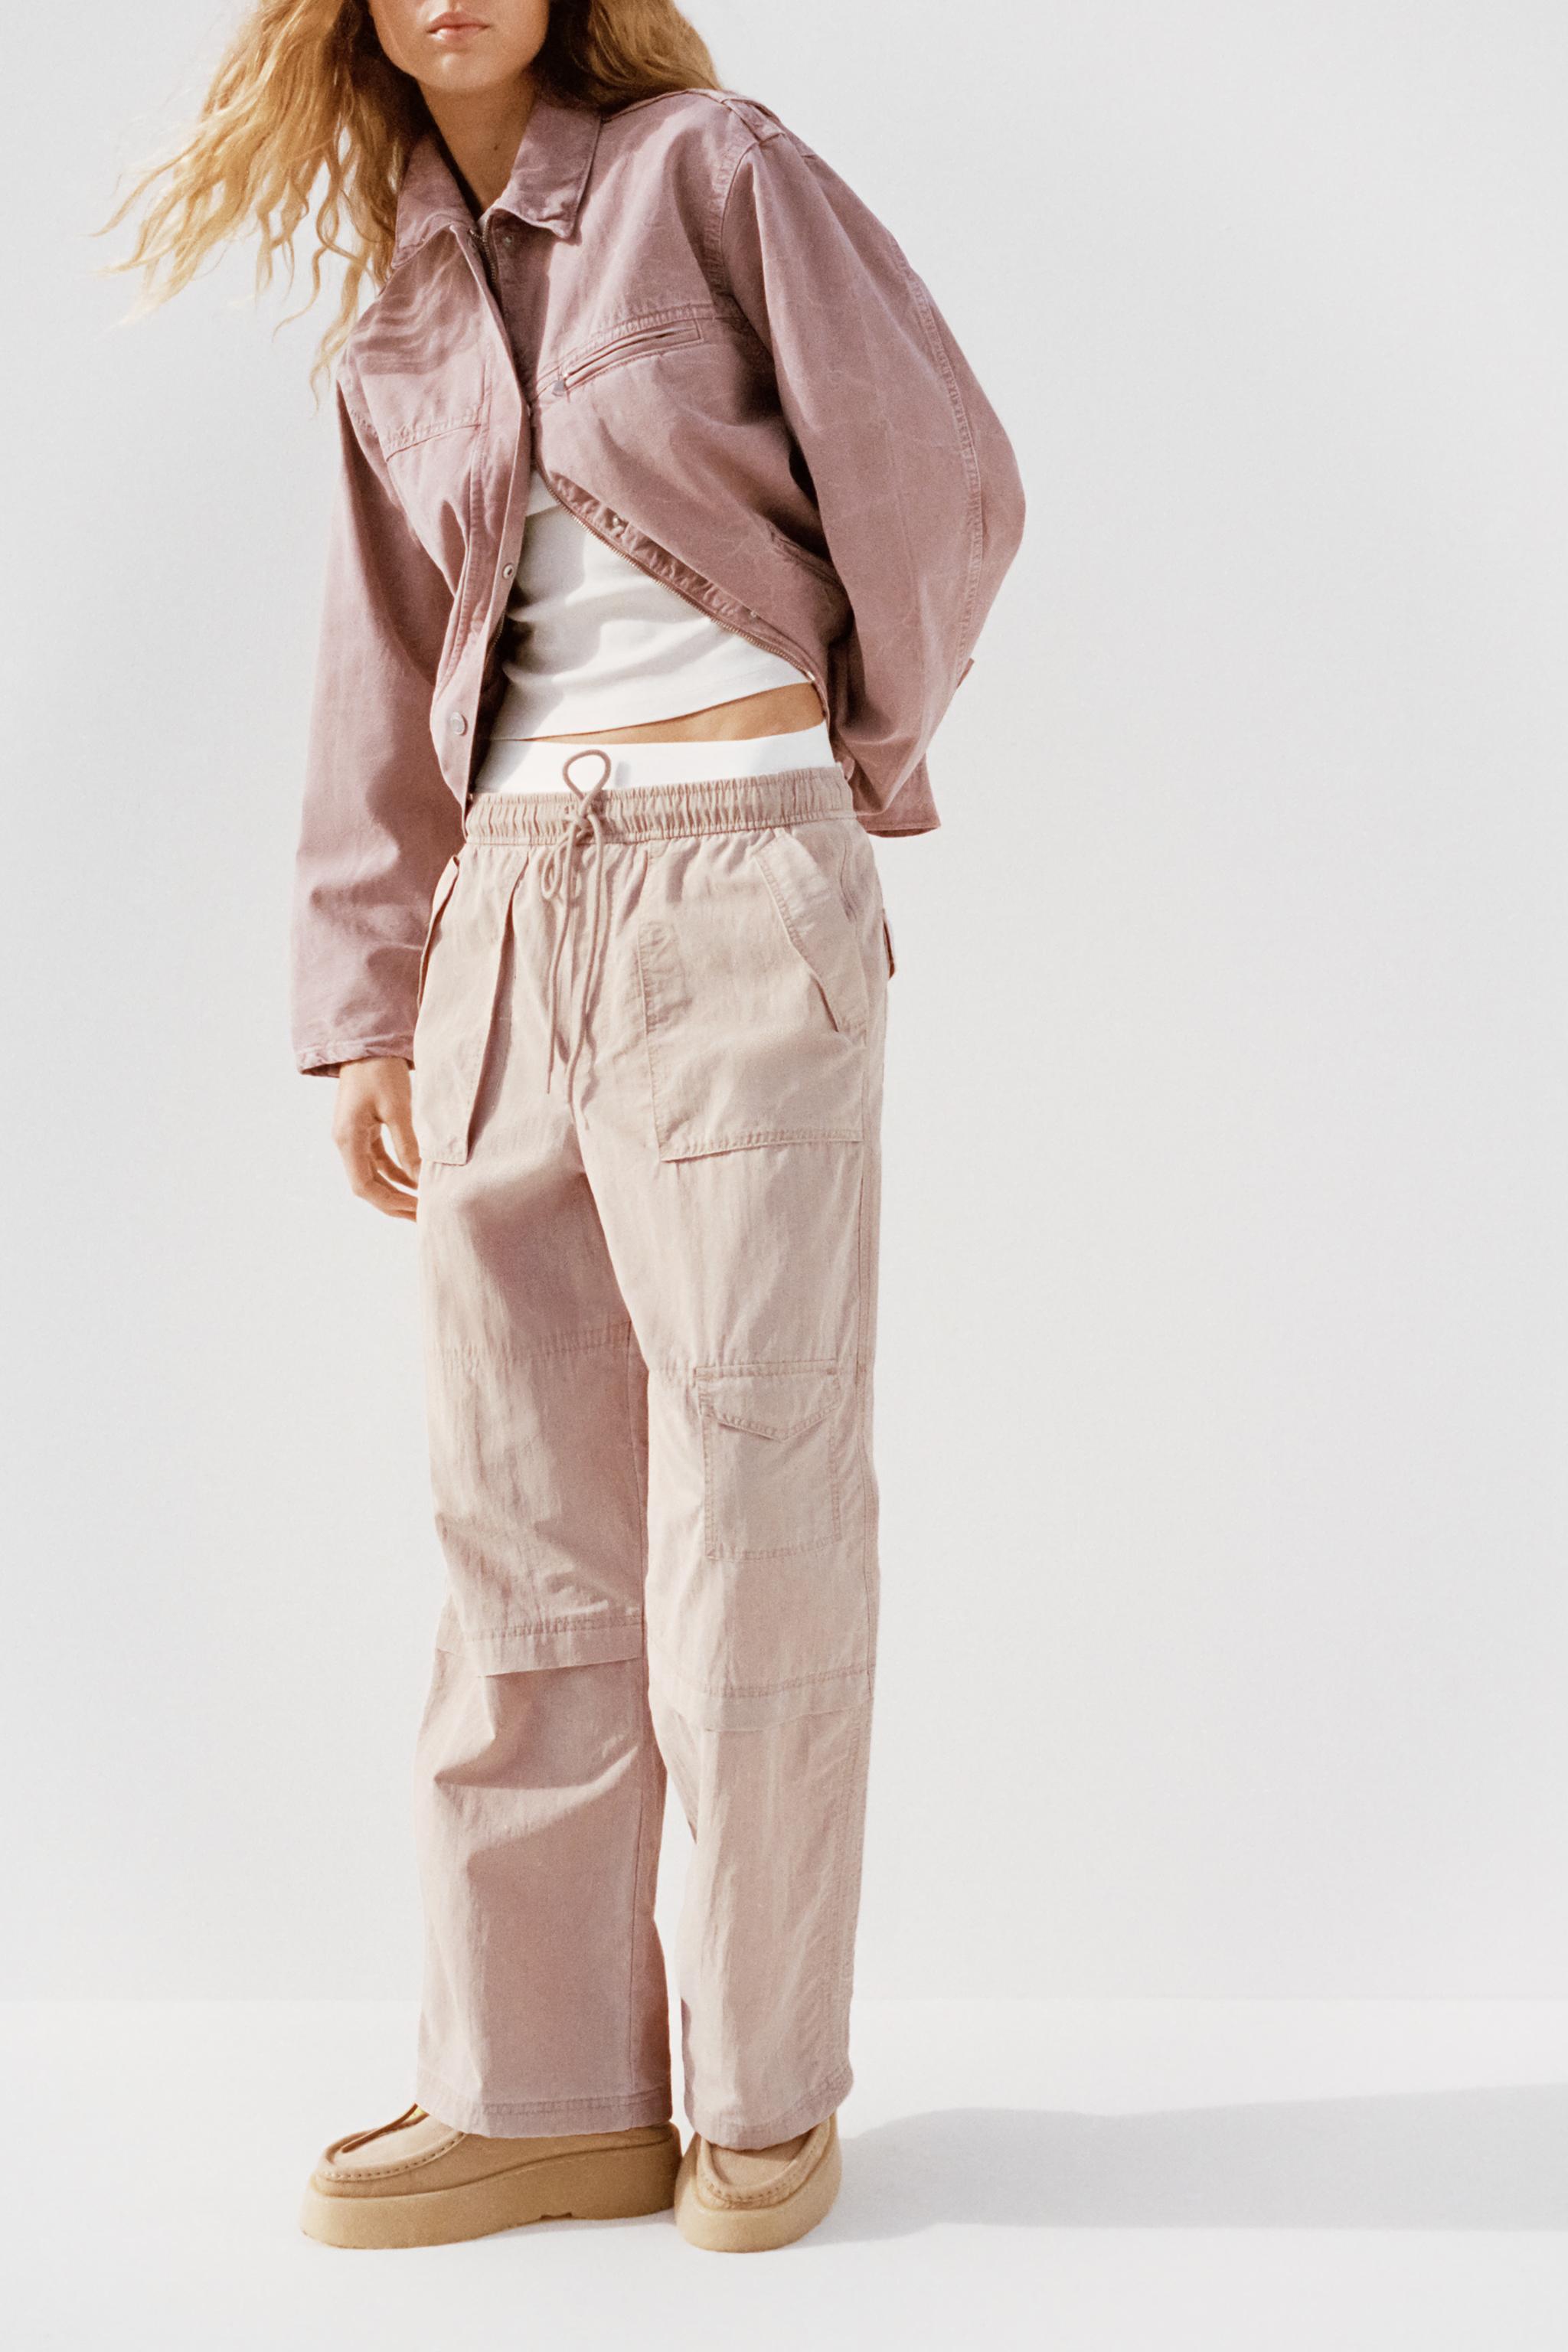 a few more Zara looks 🤍 Pink shirt 2665/103 Black trousers 2731